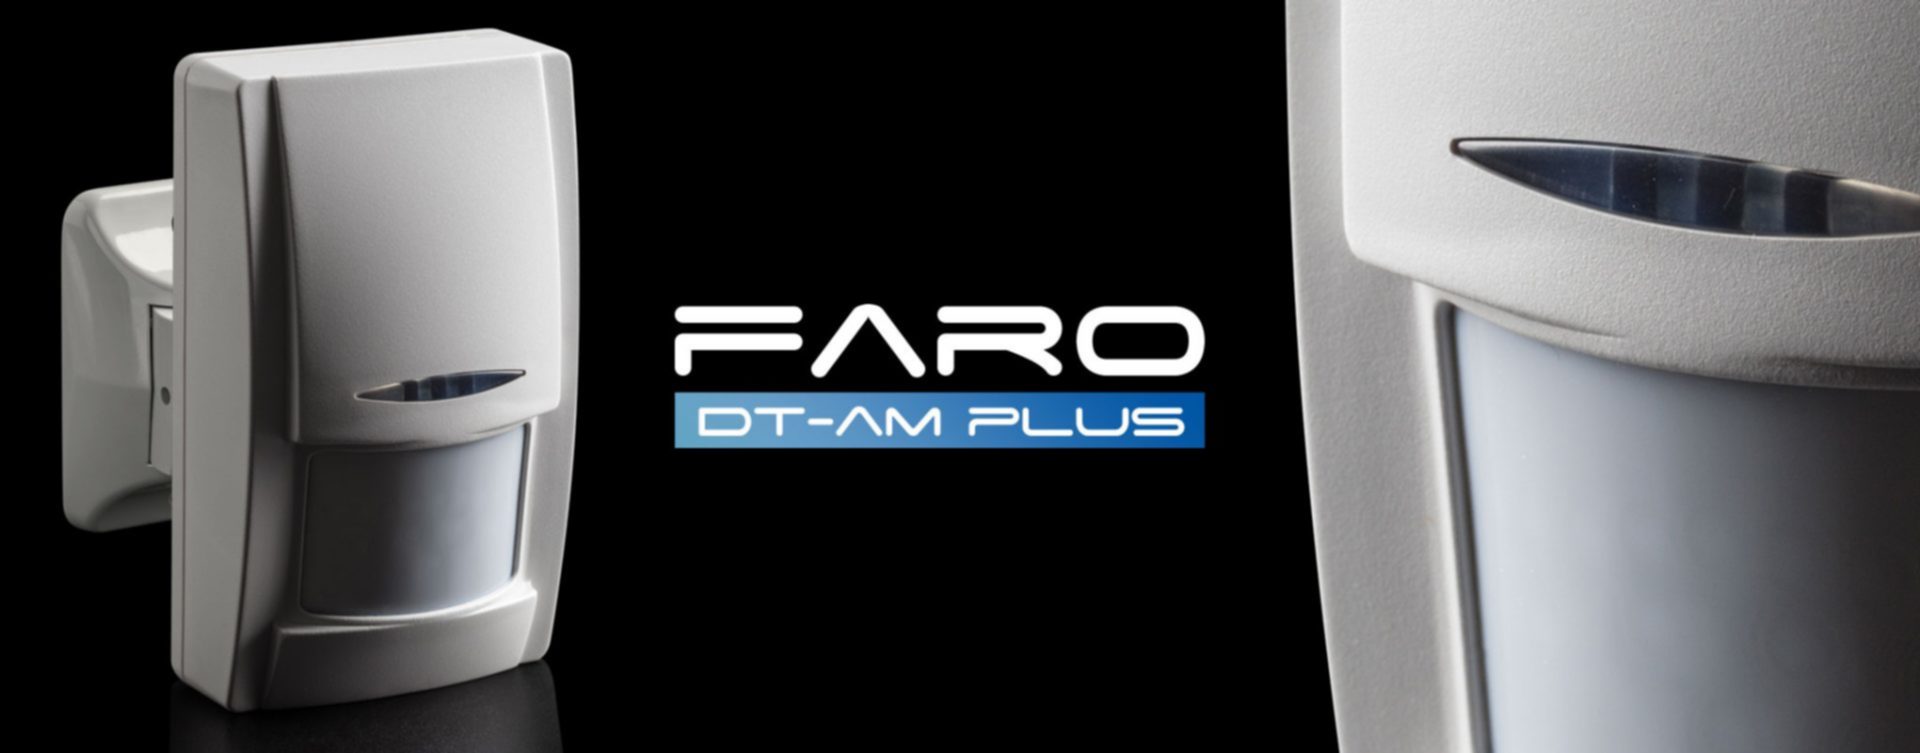 Faro DT-AM Plus | Rilevatore con sistema antimascheramento